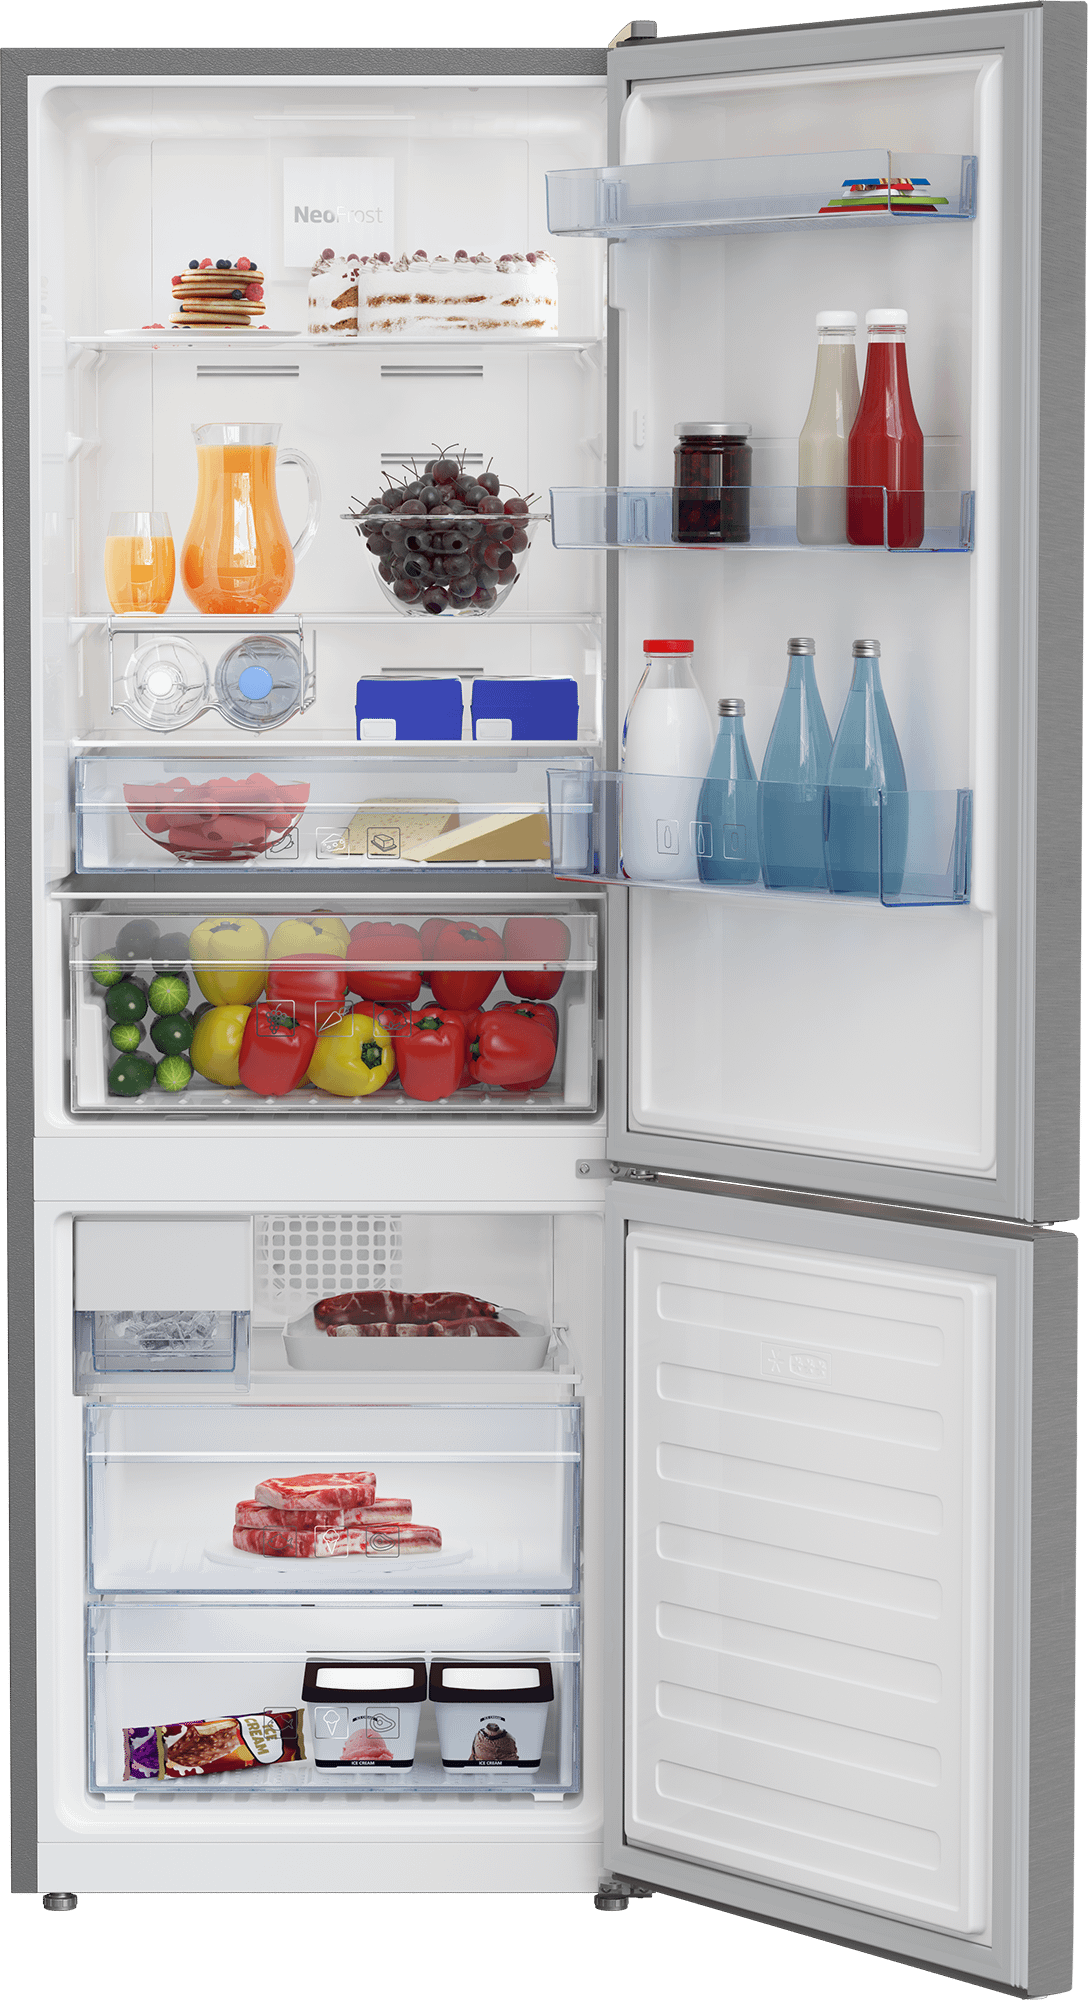 Beko 24", Bottom Freezer Refrigerator with -